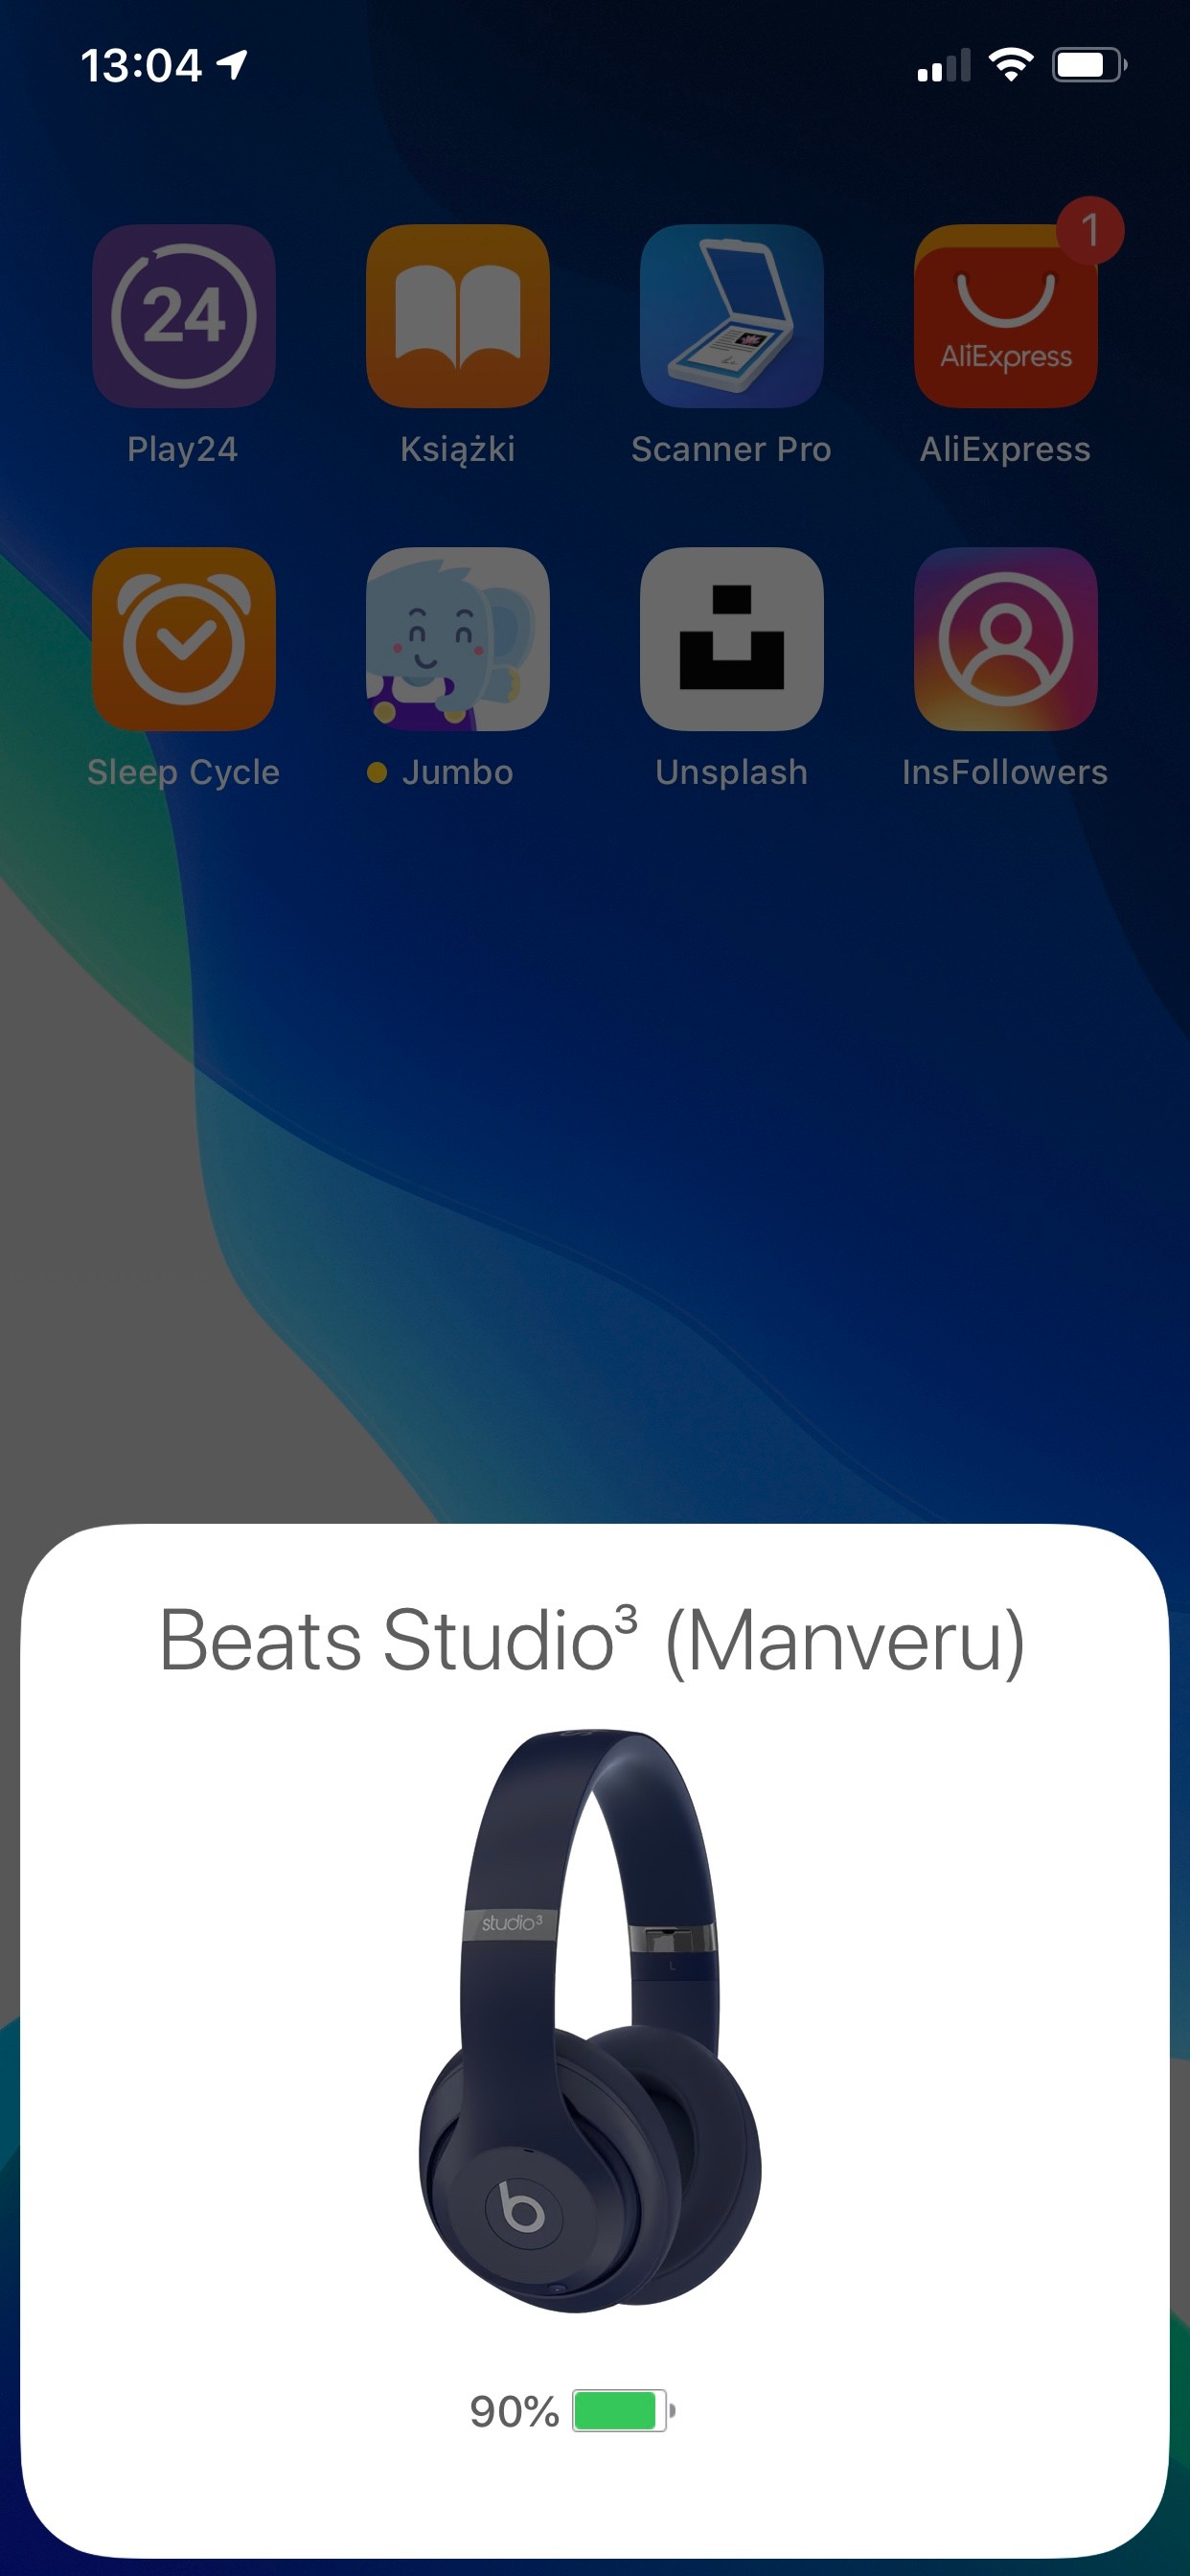 connecting beats studio 3 to iphone